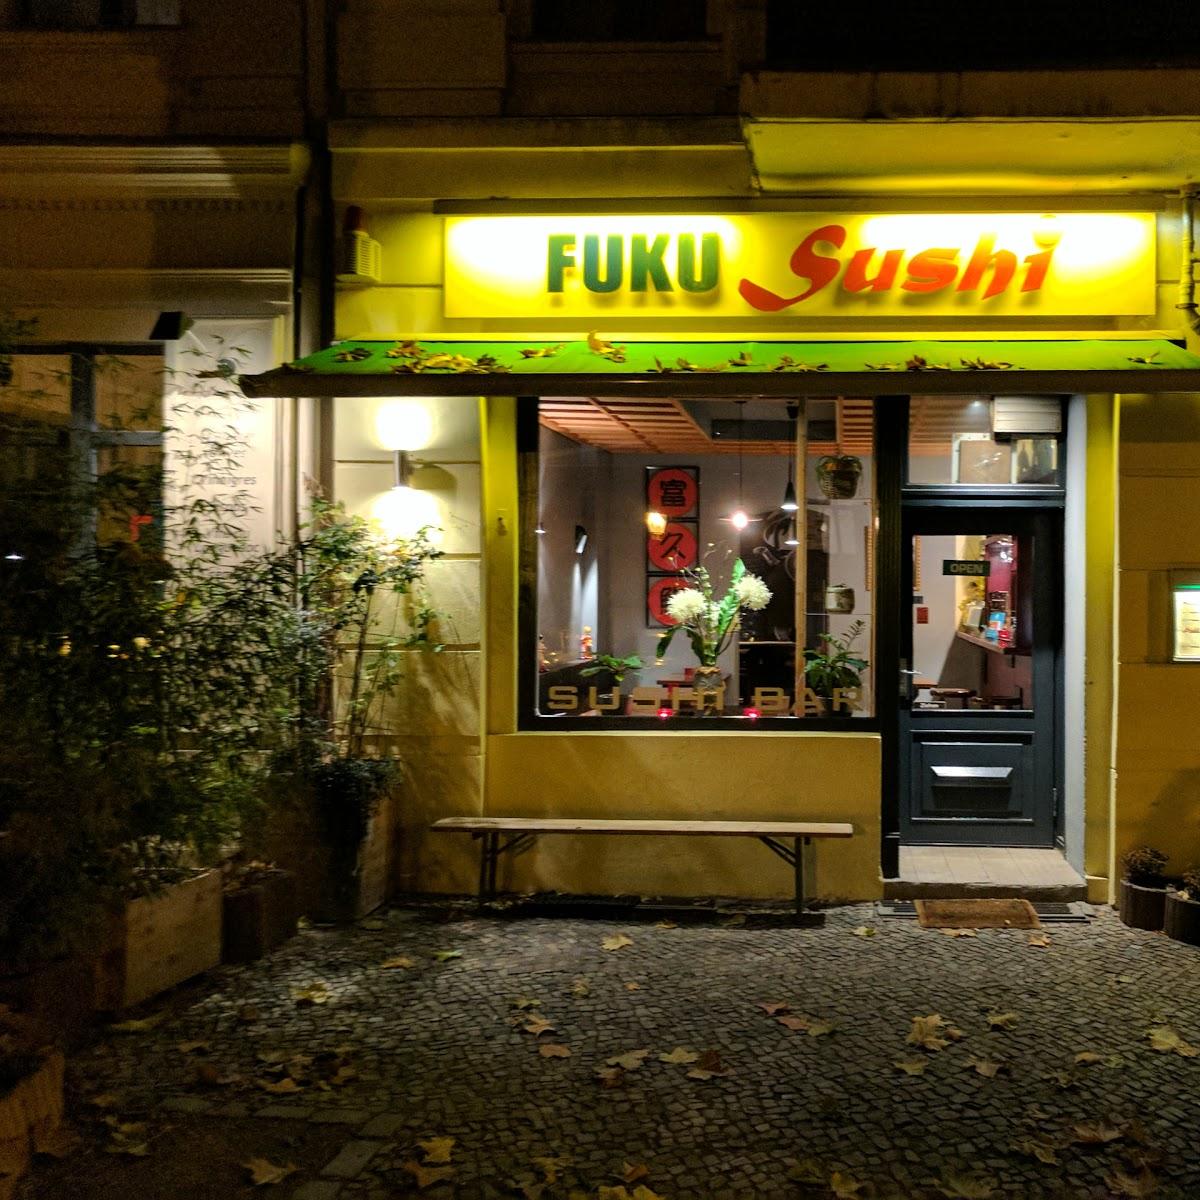 Restaurant "Fuku Sushi - Bringdienst - Berlin" in Berlin